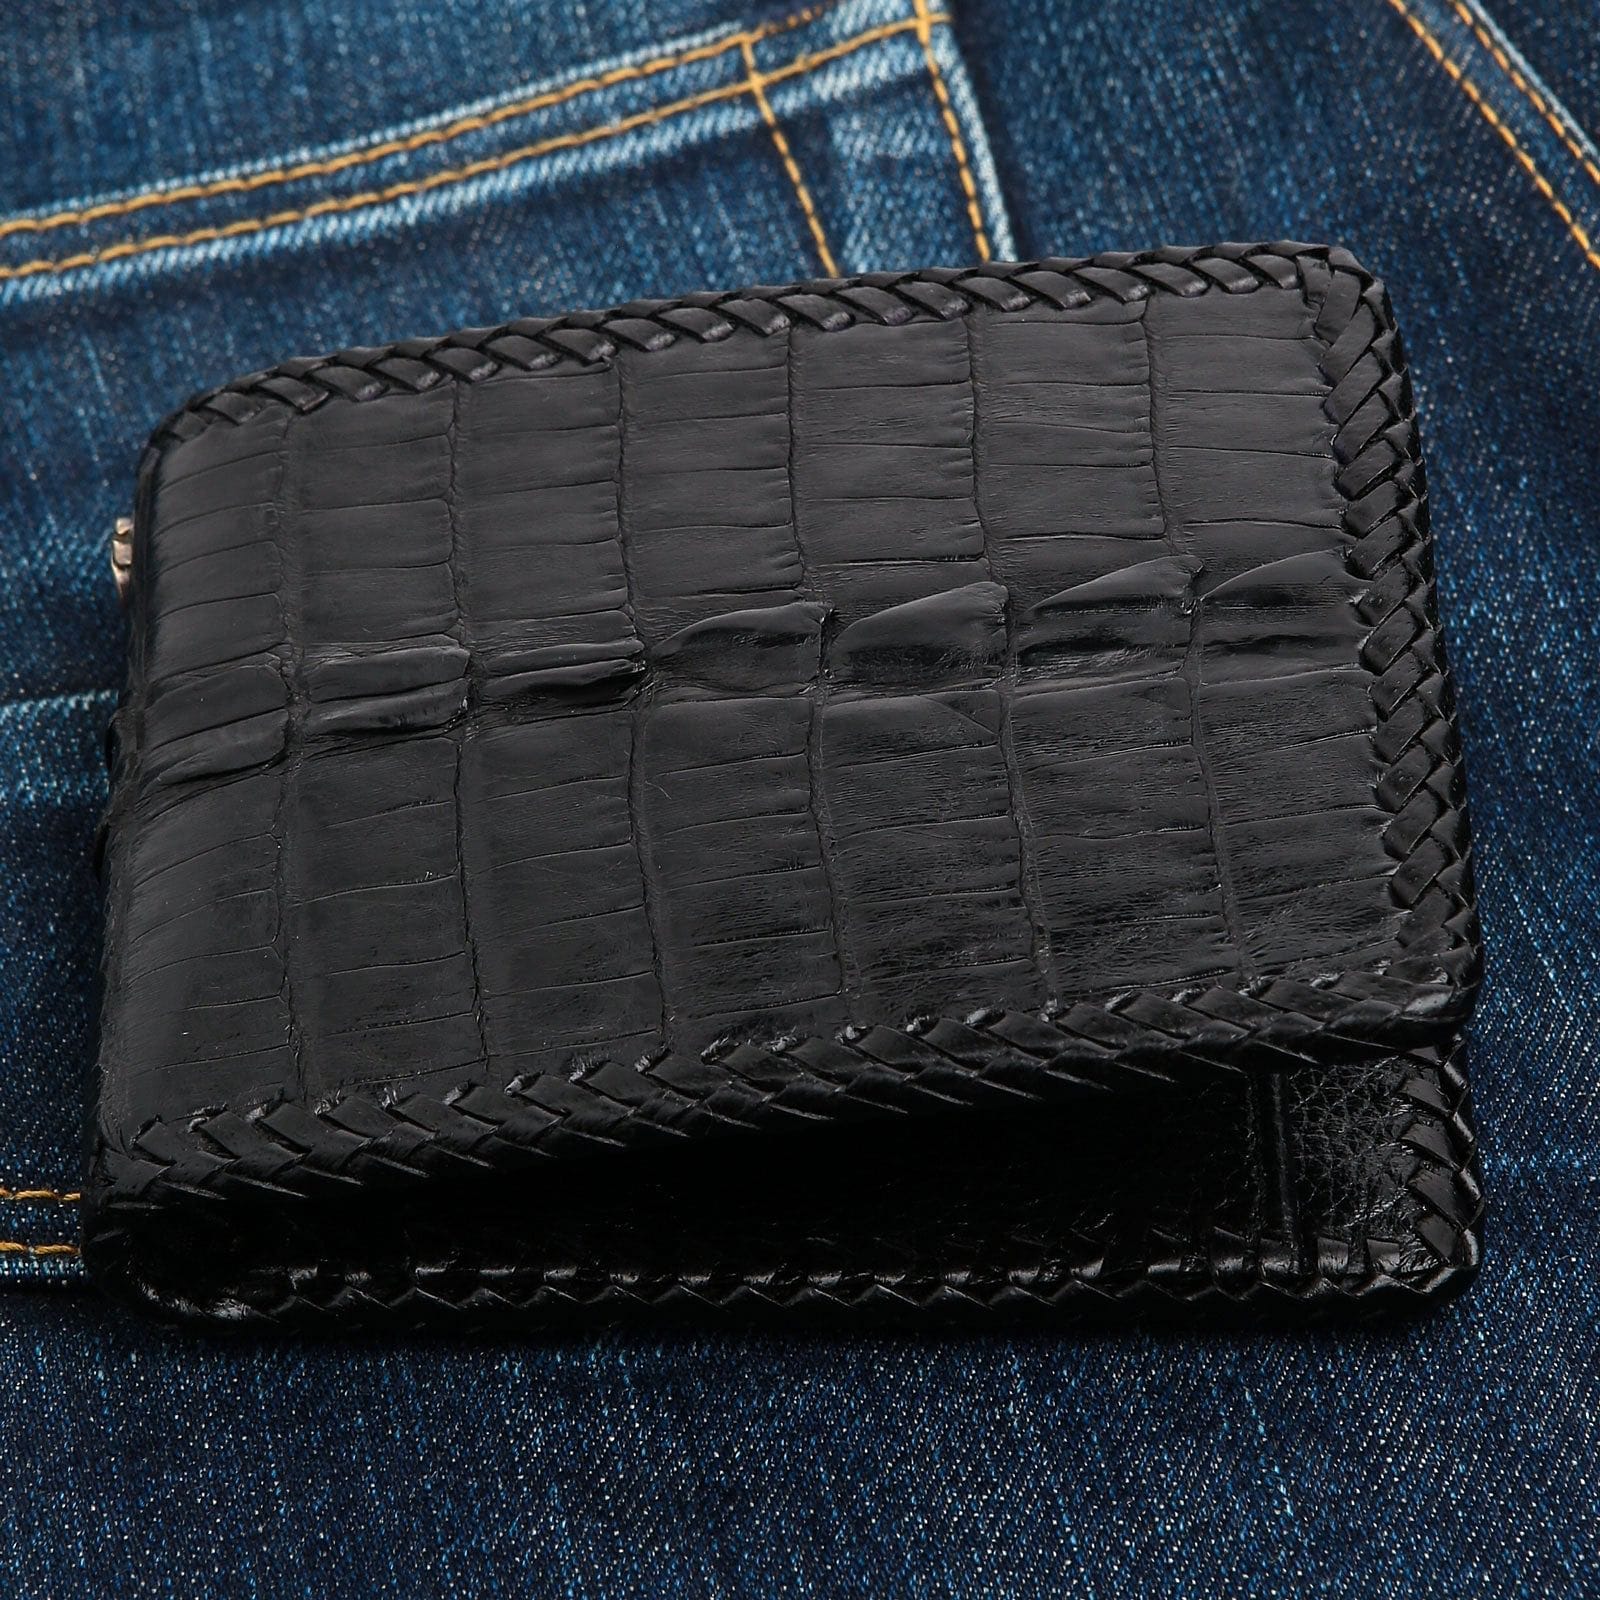 Genuine Black Crocodile Tail Skin Leather Biker Wallet